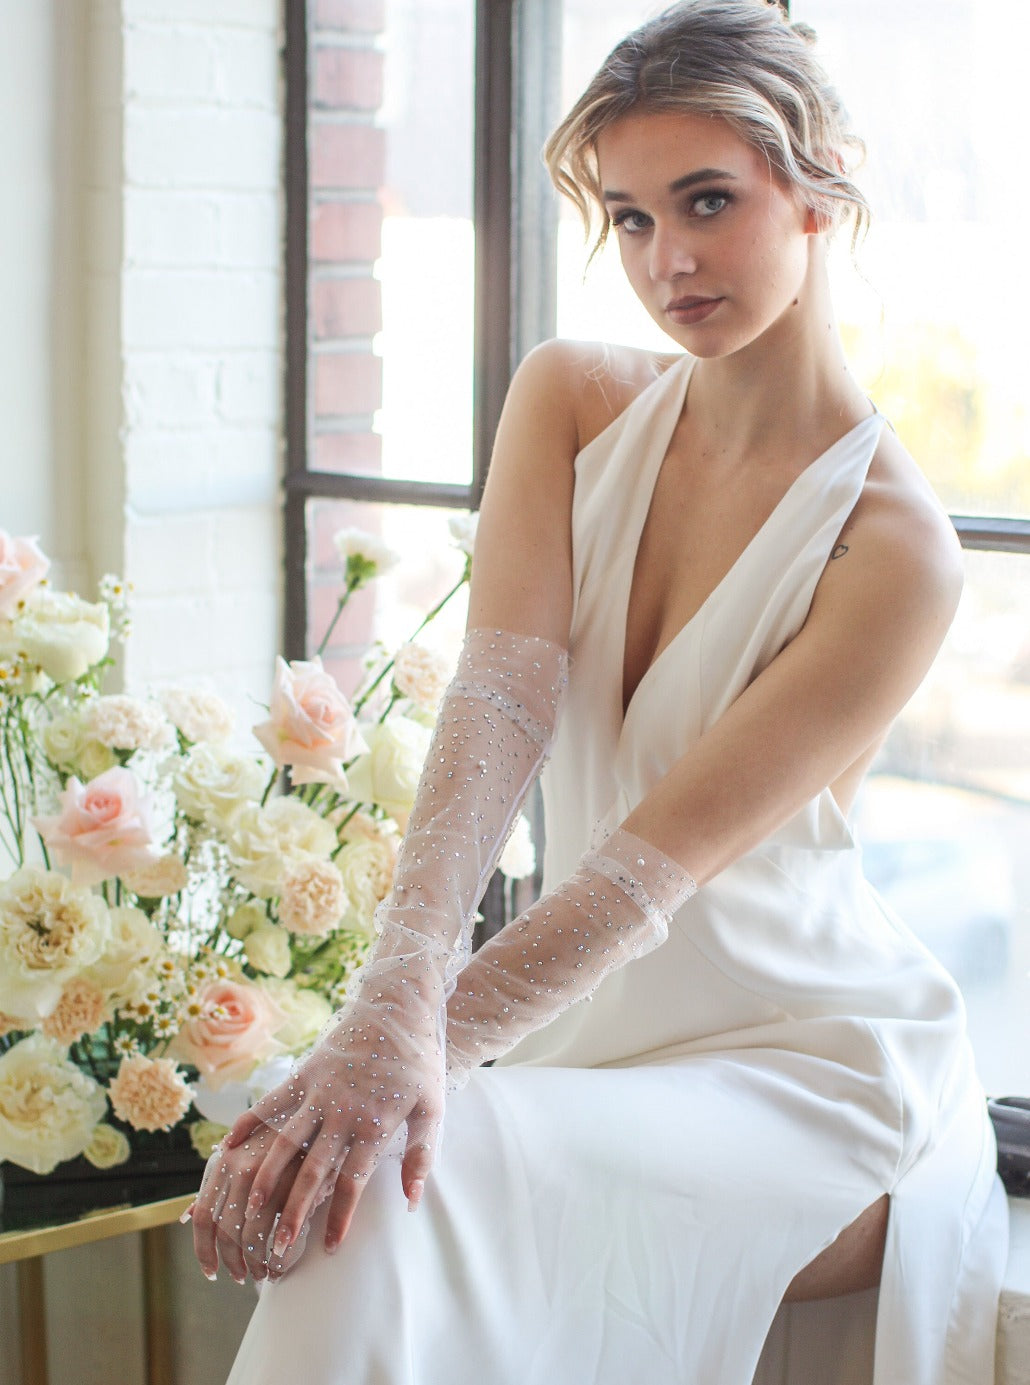 Bride Dress Bridal Gloves Stock Photo 521471500 | Shutterstock